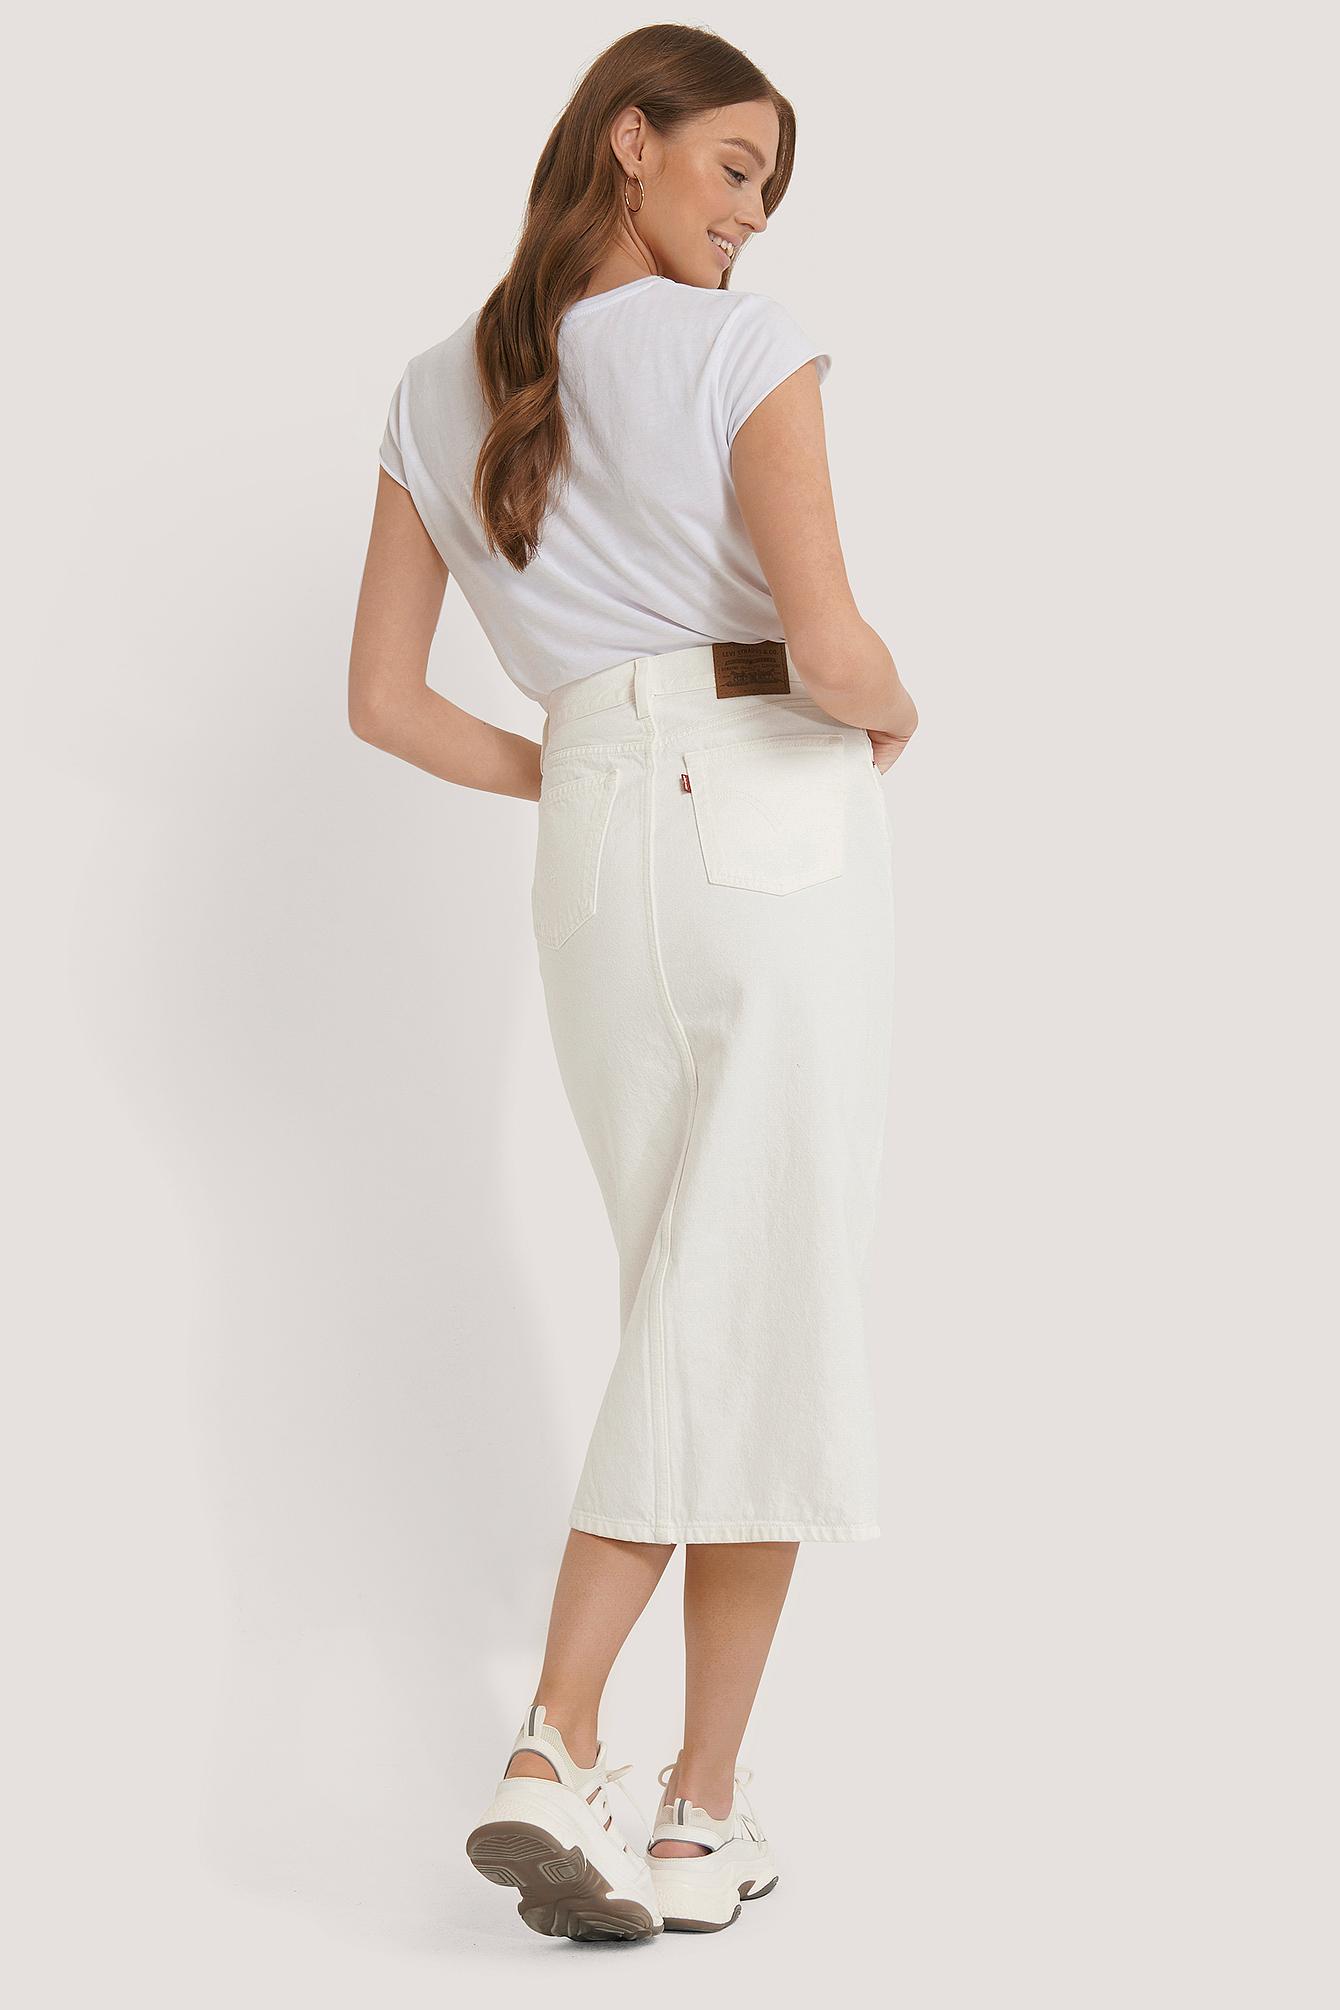 Levi's White Button Front Midi Skirt | Lyst